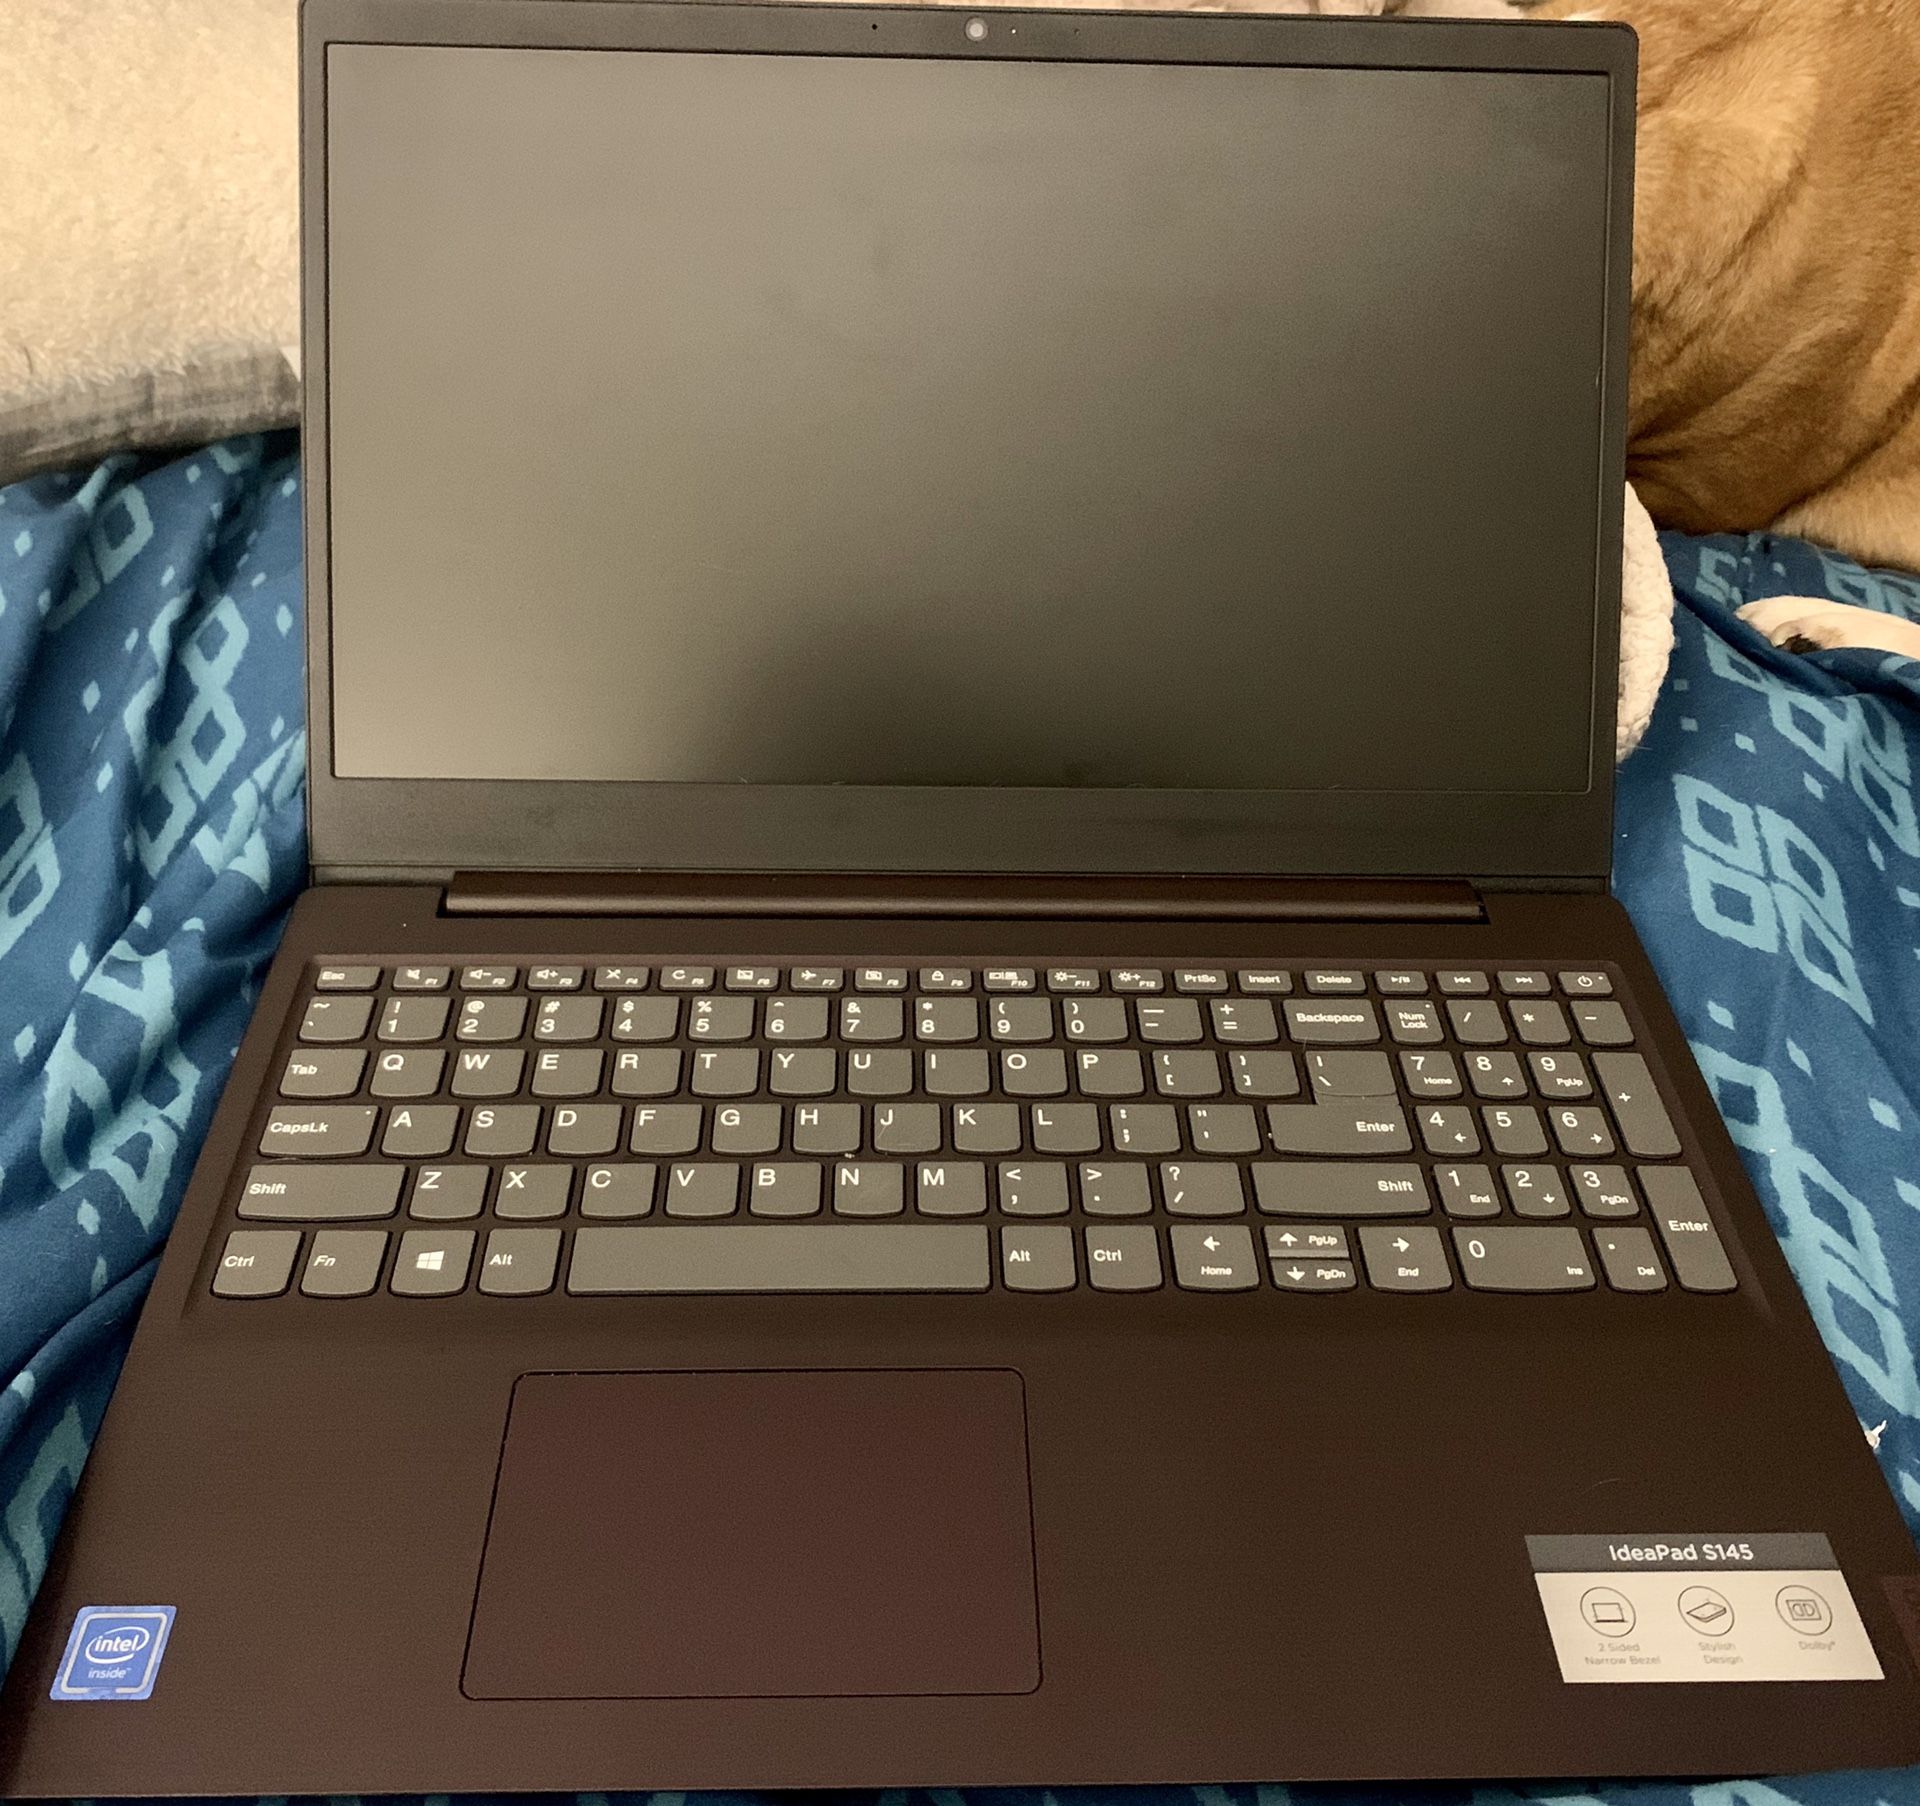 Lenovo ideapad 15.6" Laptop- dark orchid color